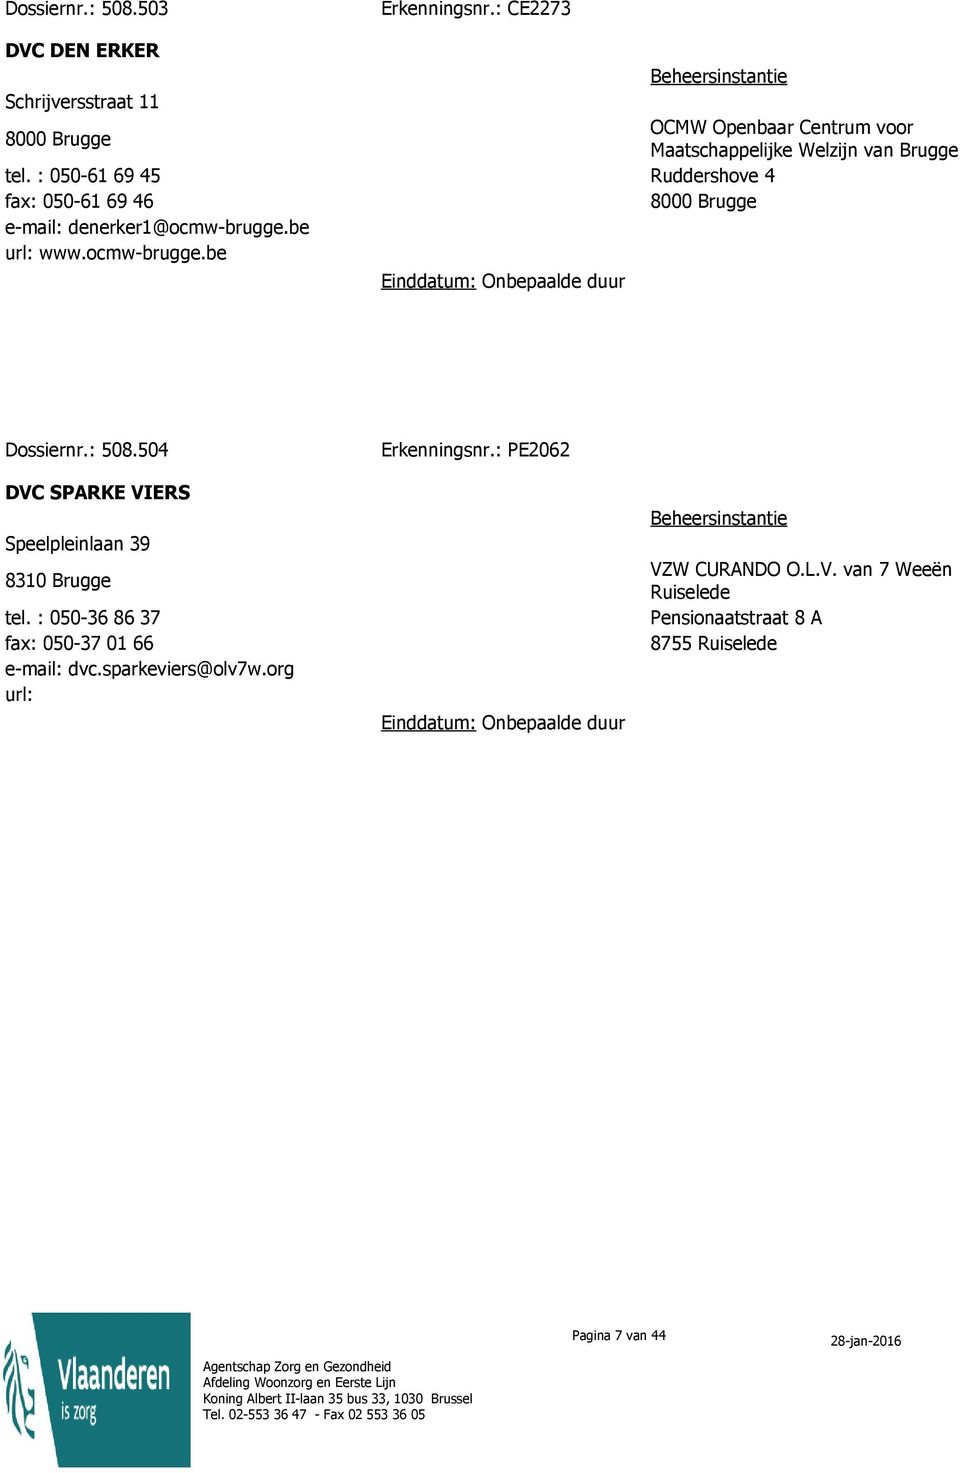 : 050-61 69 45 Ruddershove 4 fax: 050-61 69 46 8000 Brugge e-mail: denerker1@ocmw-brugge.be url: www.ocmw-brugge.be Dossiernr.: 508.